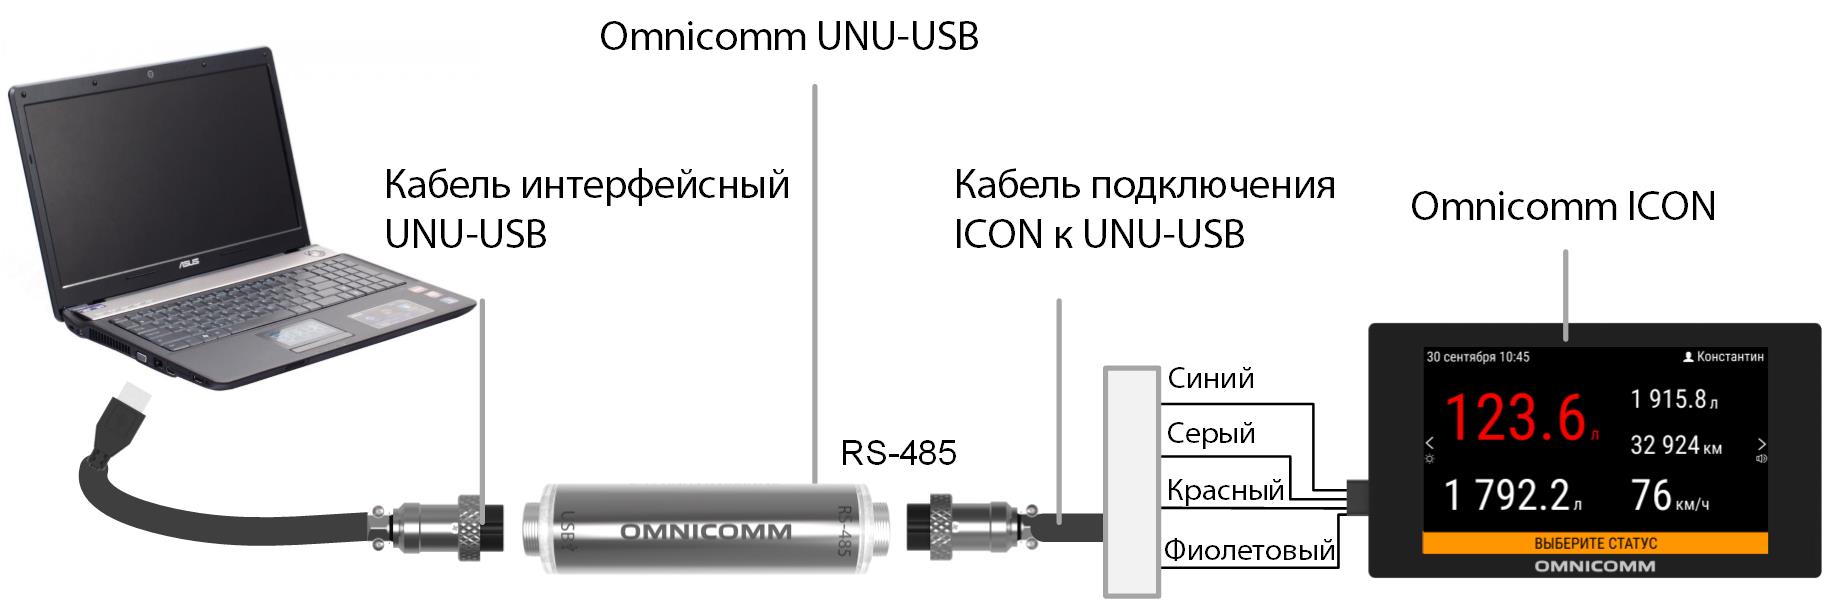 Схема подключения Omnicomm ICON к ПК 